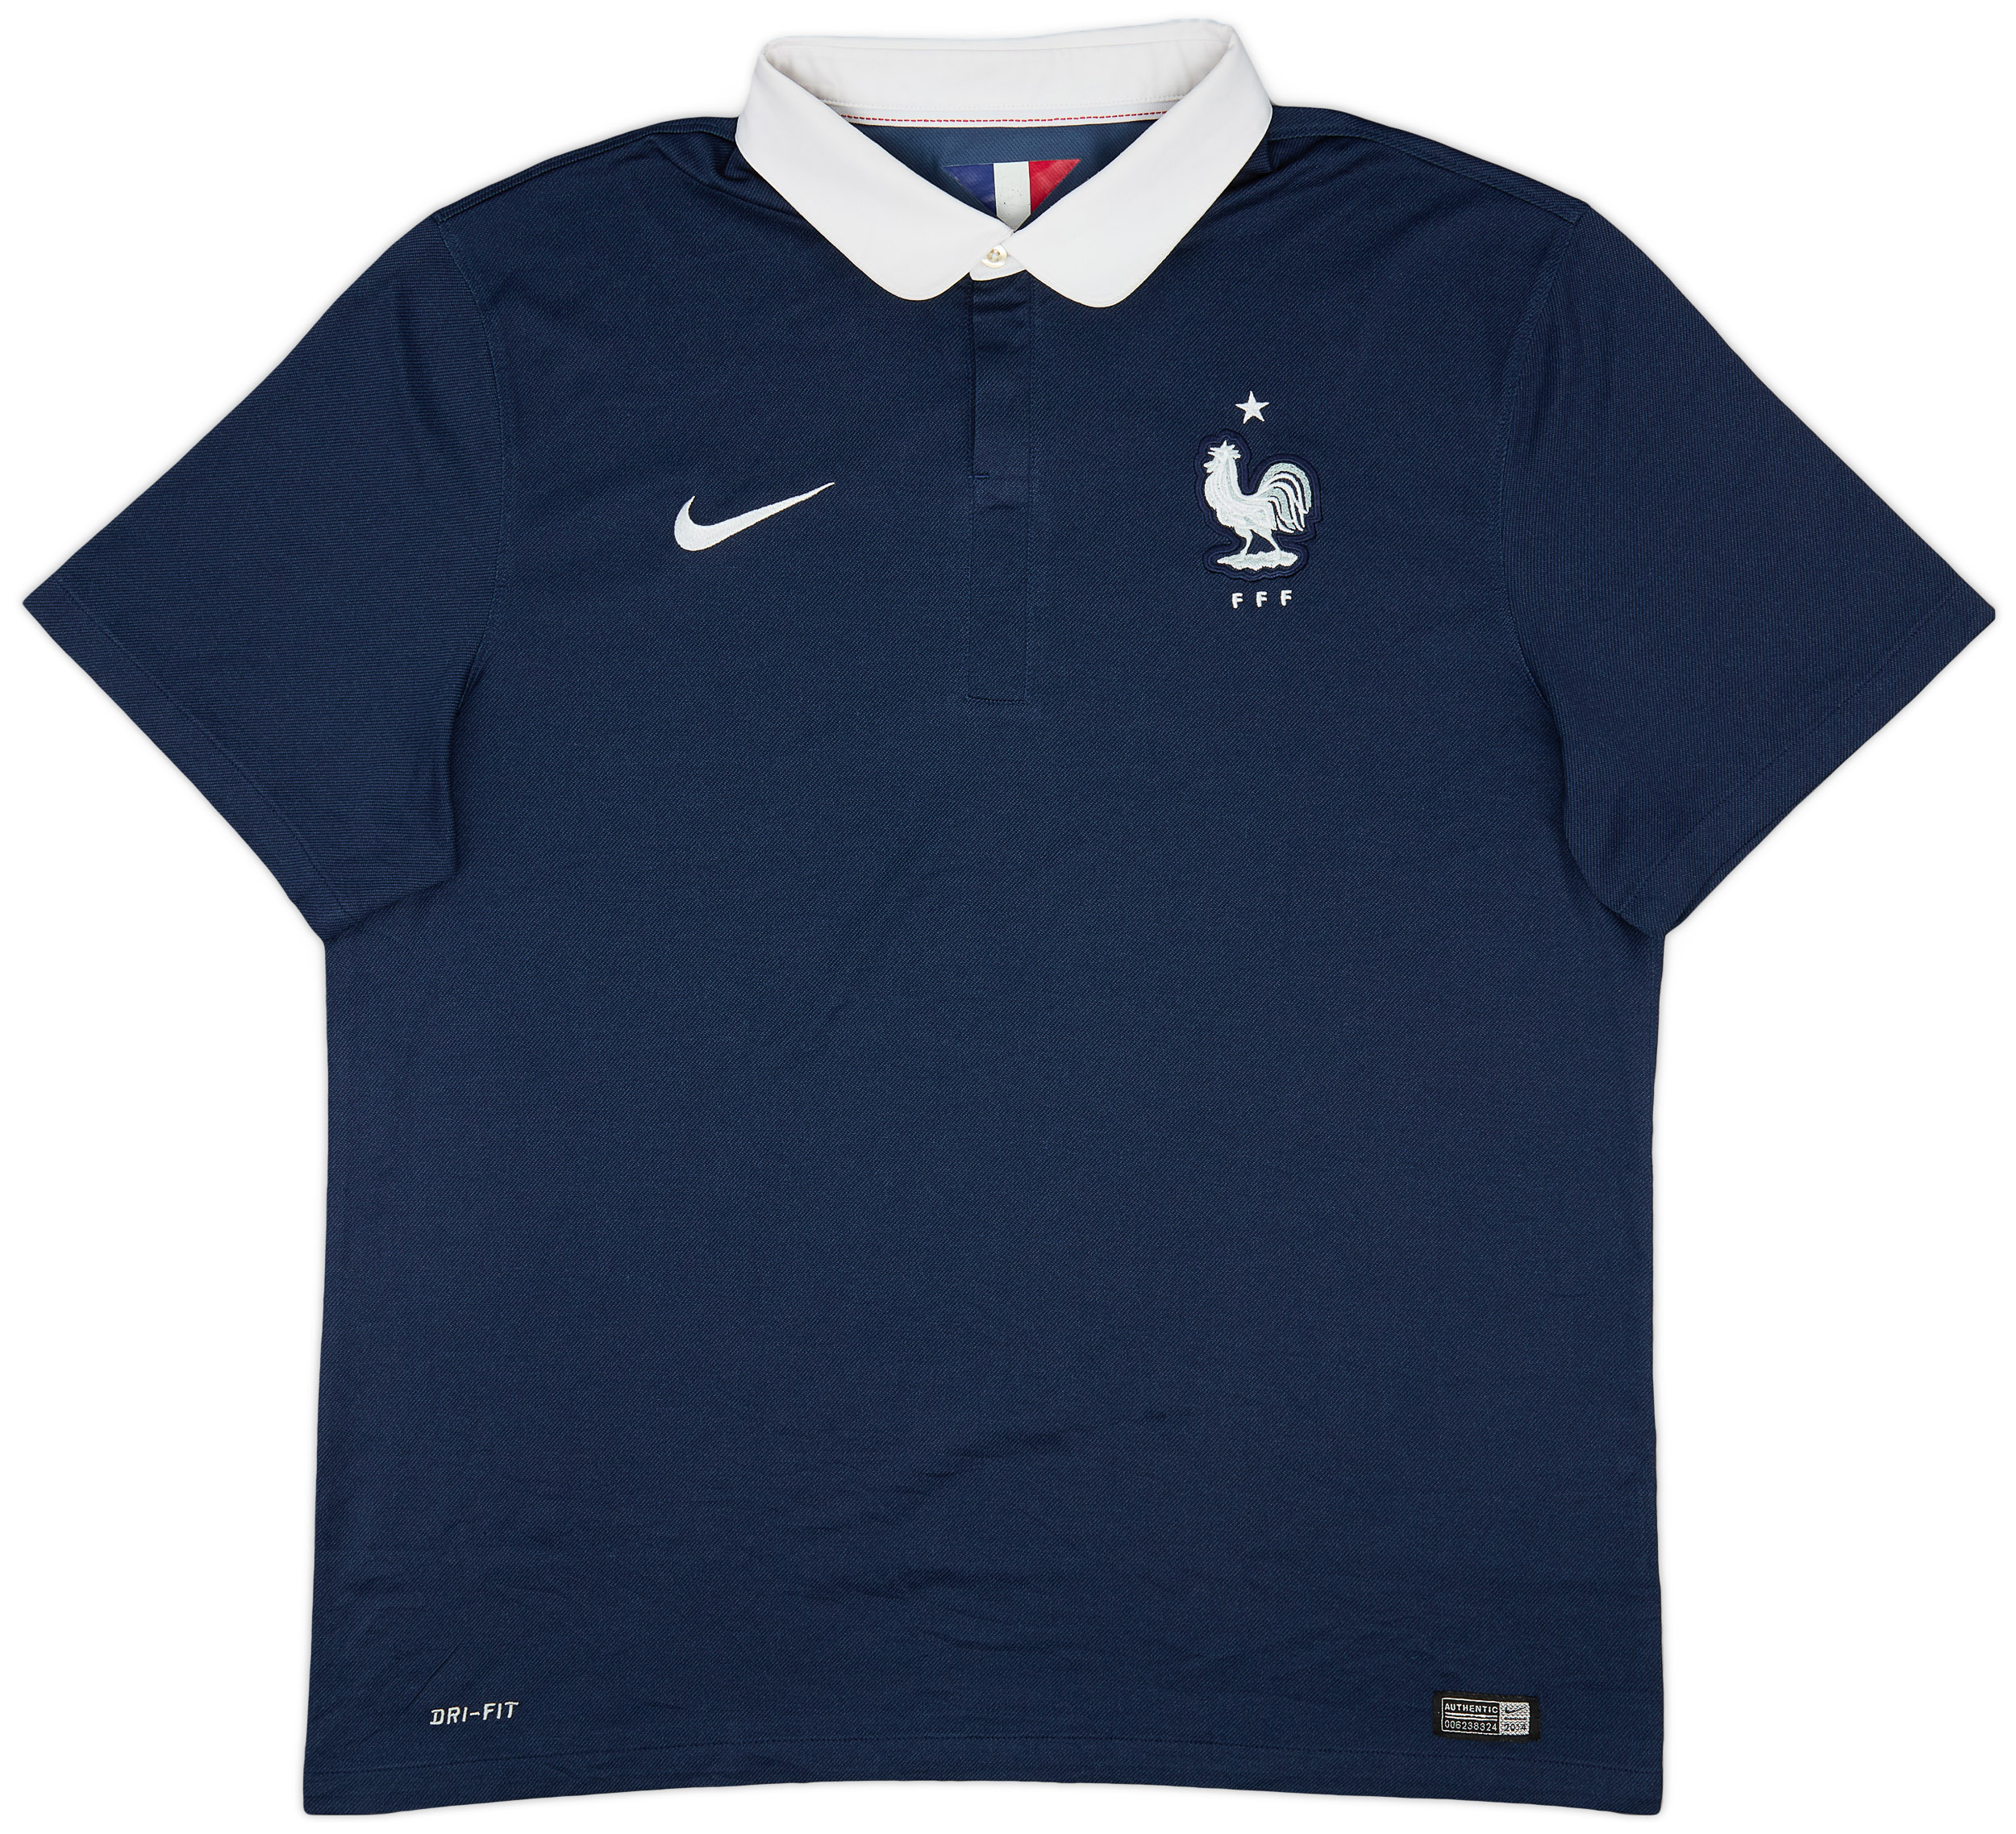 2014-15 France Home Shirt - 9/10 - ()